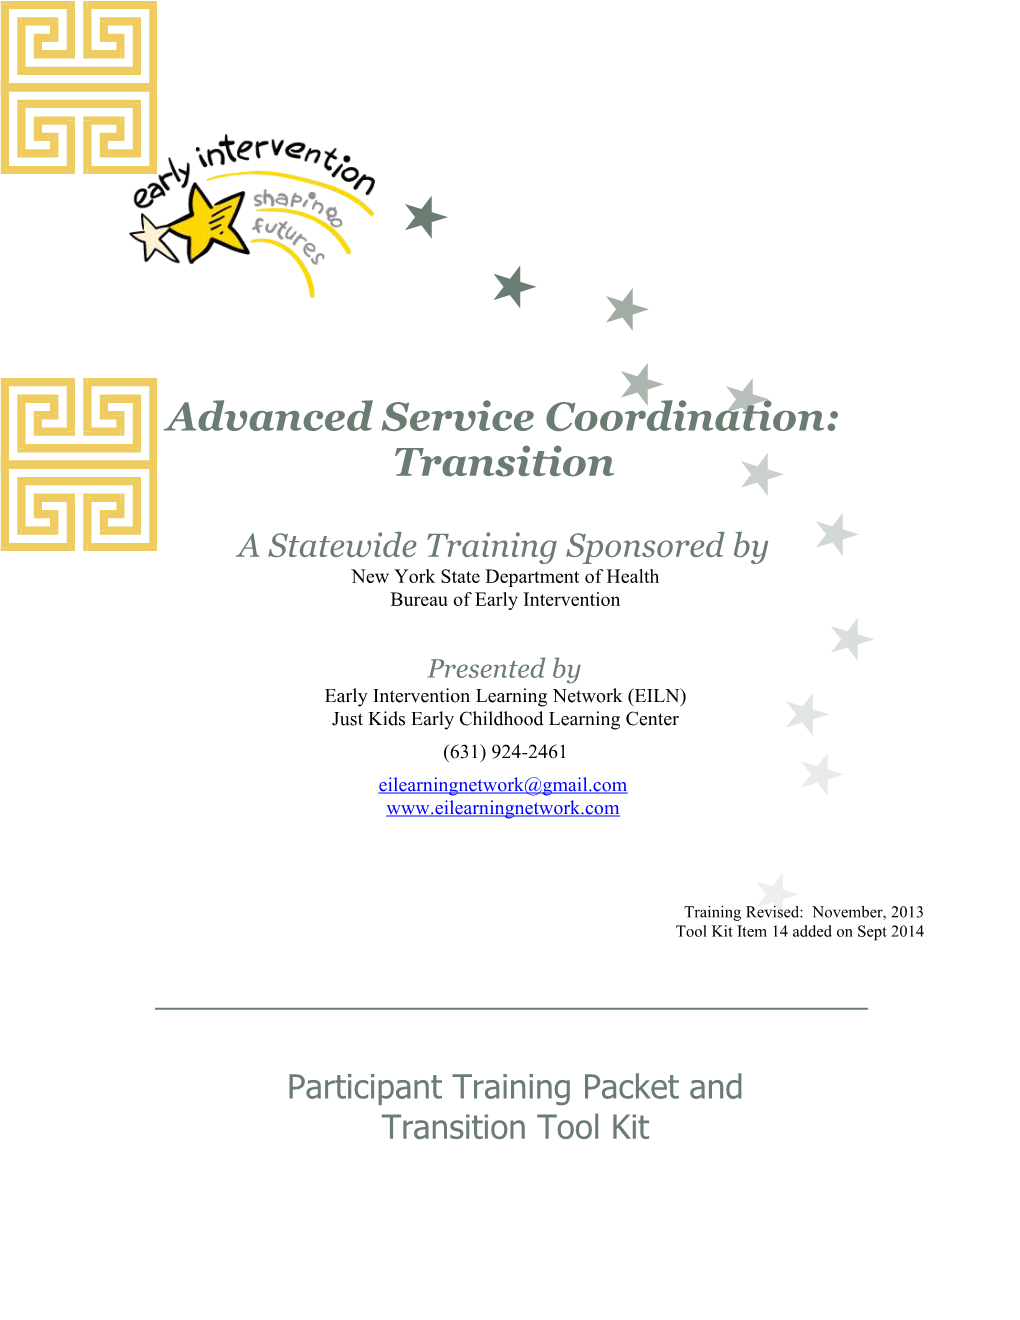 Advanced Service Coordination: Transition